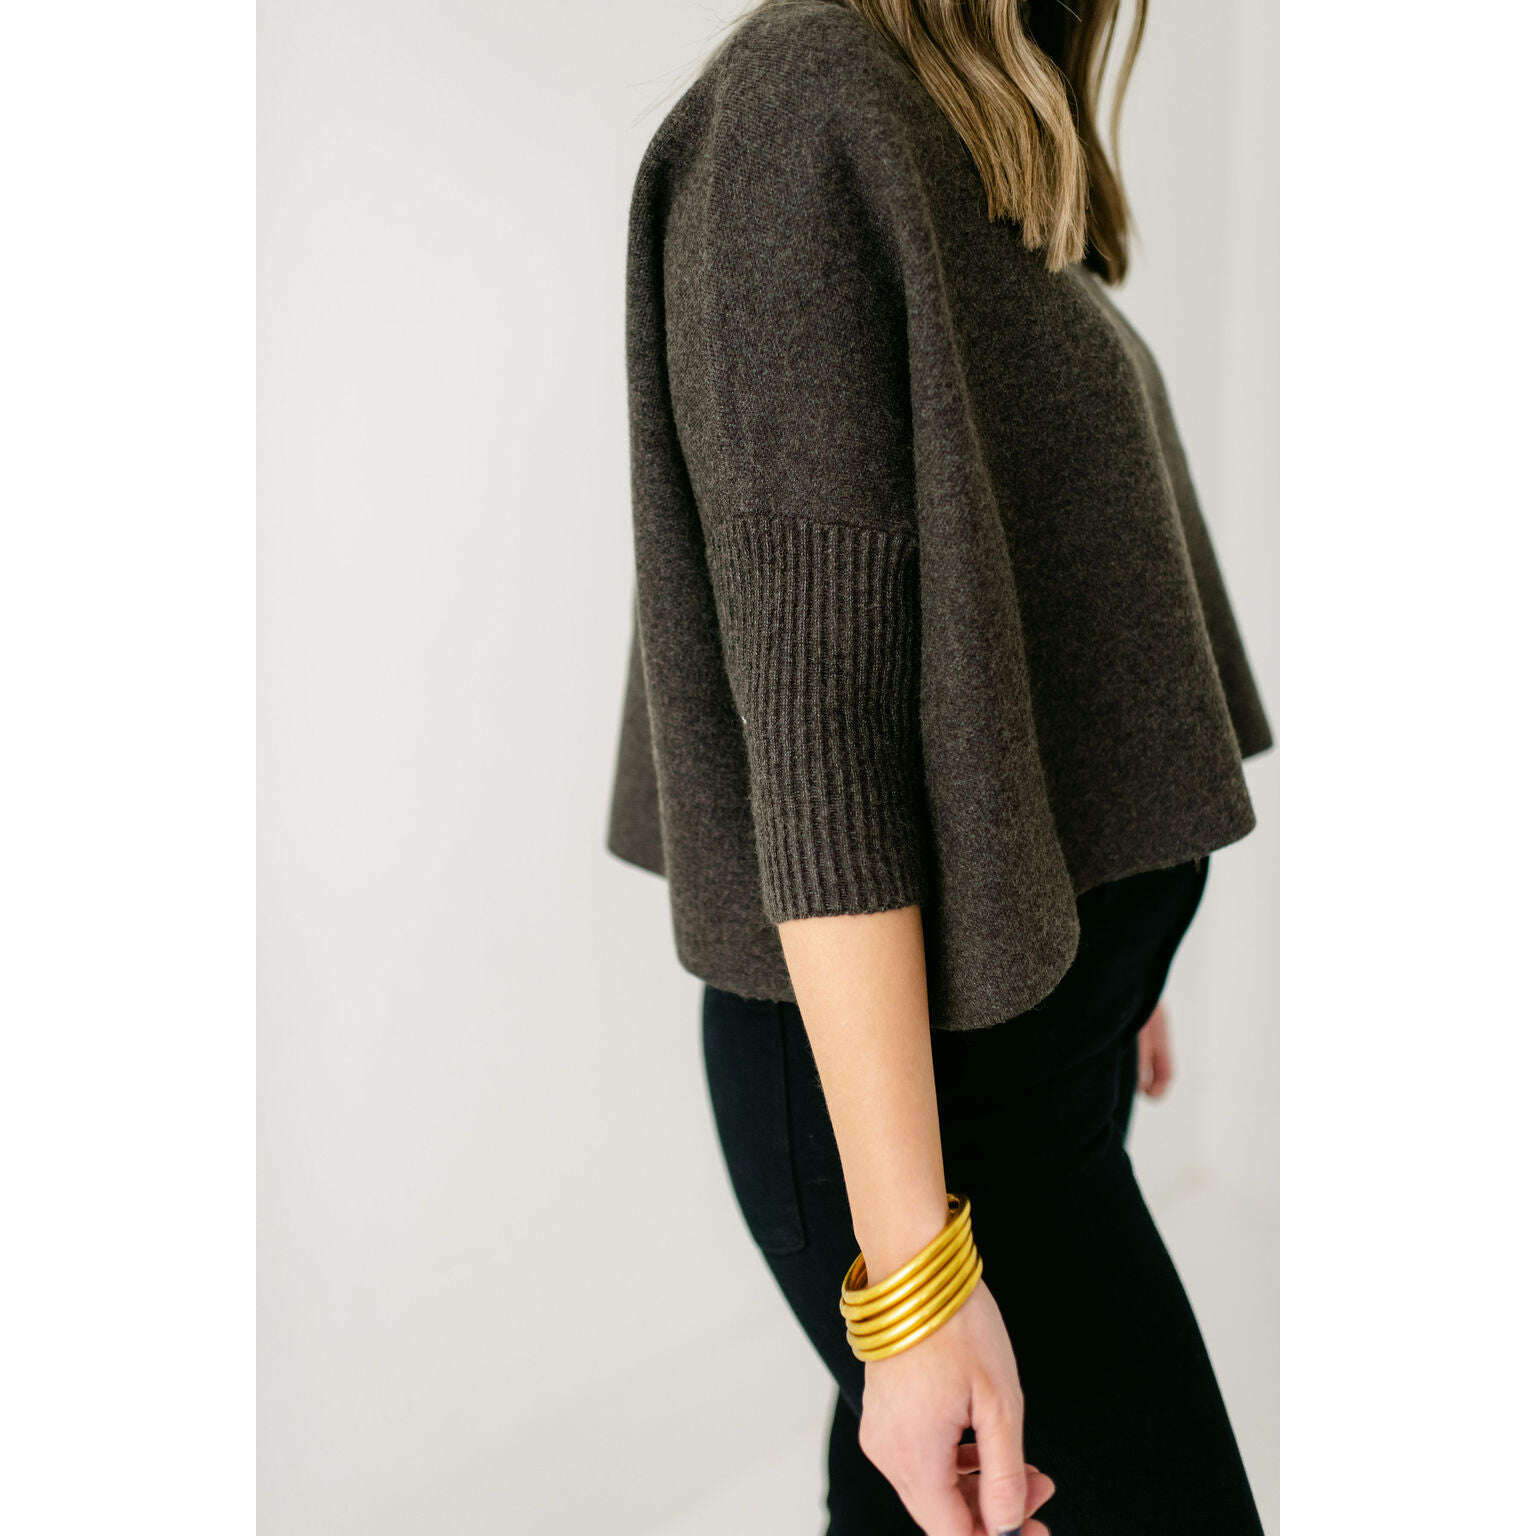 8.28 Boutique:Kerisma Knits,Kerisma Knits Aja Sweater in Charcoal,Sweaters